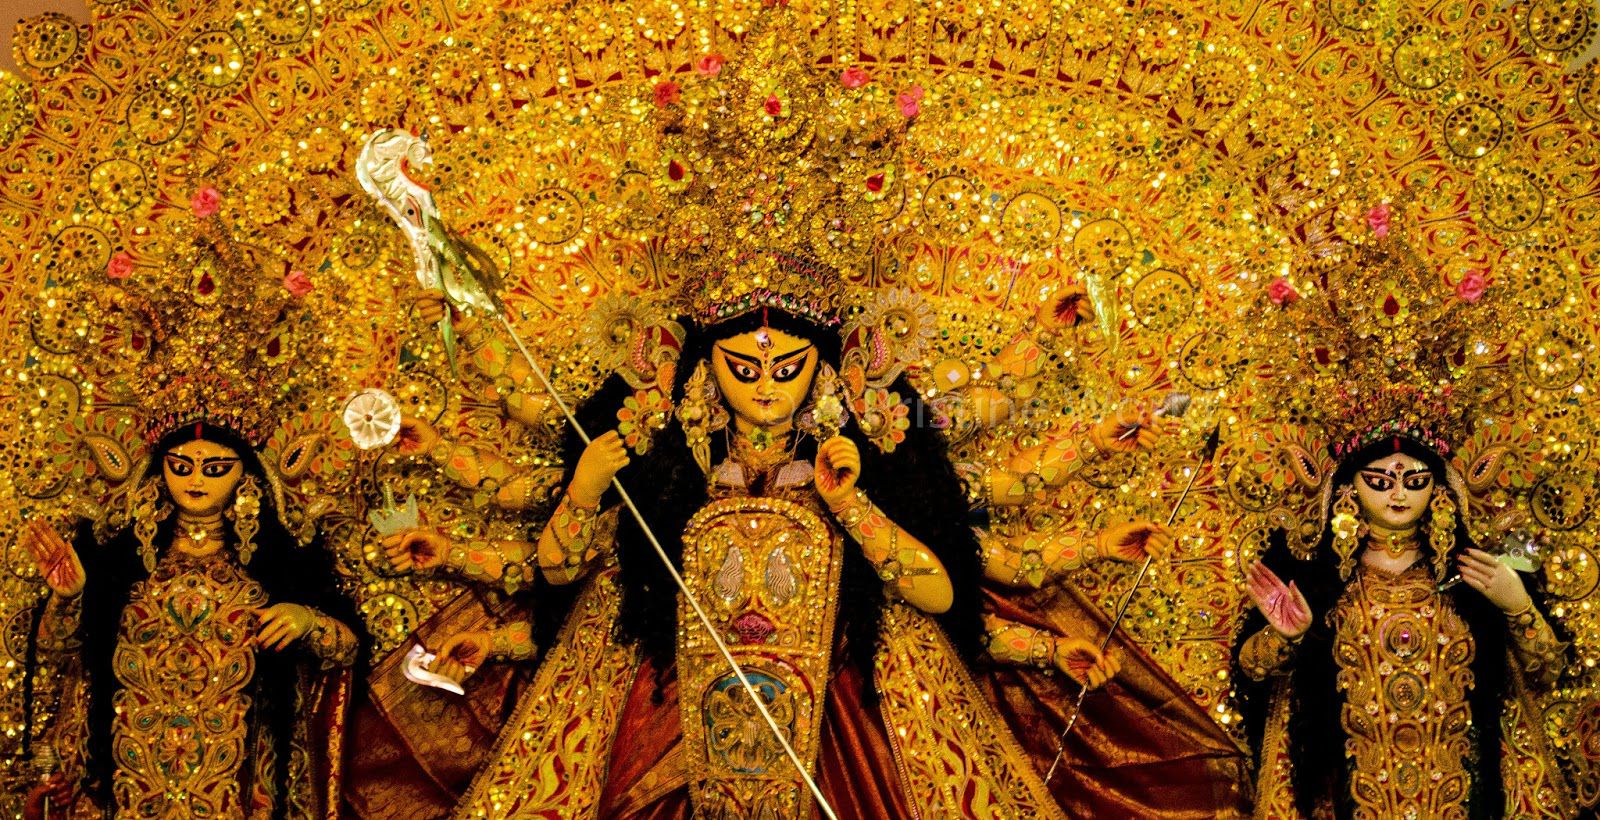 Durga Puja Images Hd - Saptami Of Durga Puja 2019 - 1600x820 Wallpaper -  